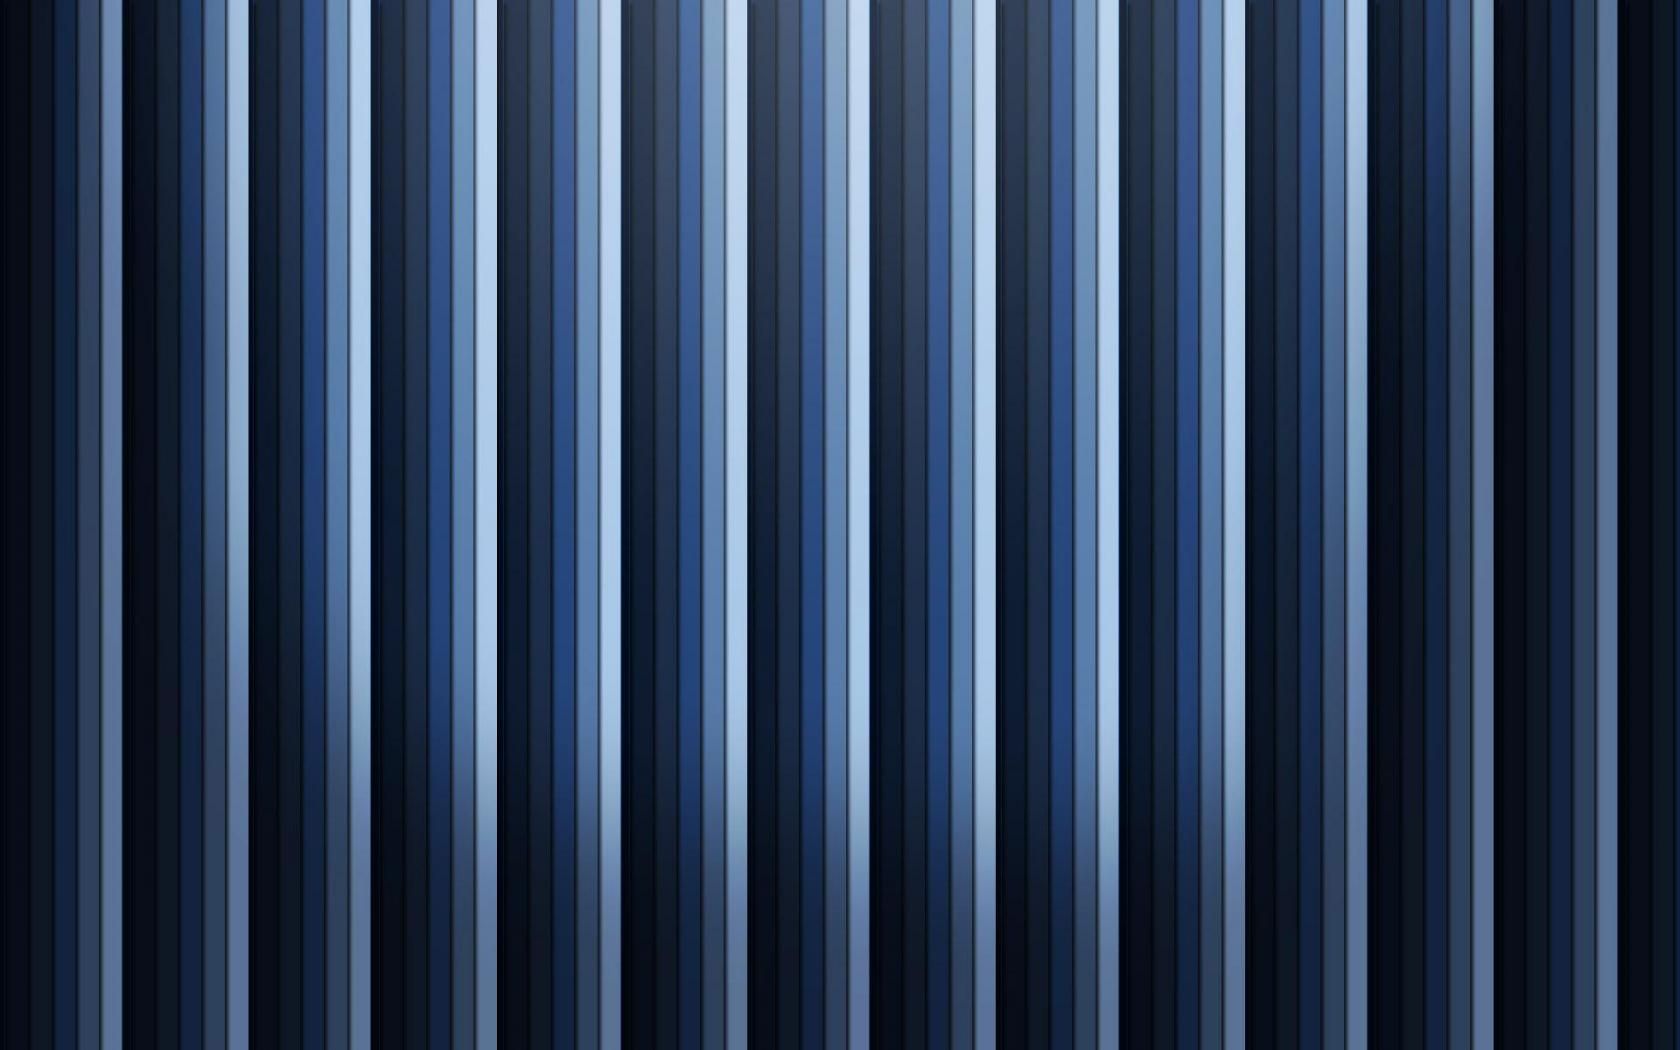 Dark Blue and Black Stripe Wallpaper. Floral Stripe Wallpaper, Gold Stripe Wallpaper and Paisley Stripe Wallpaper